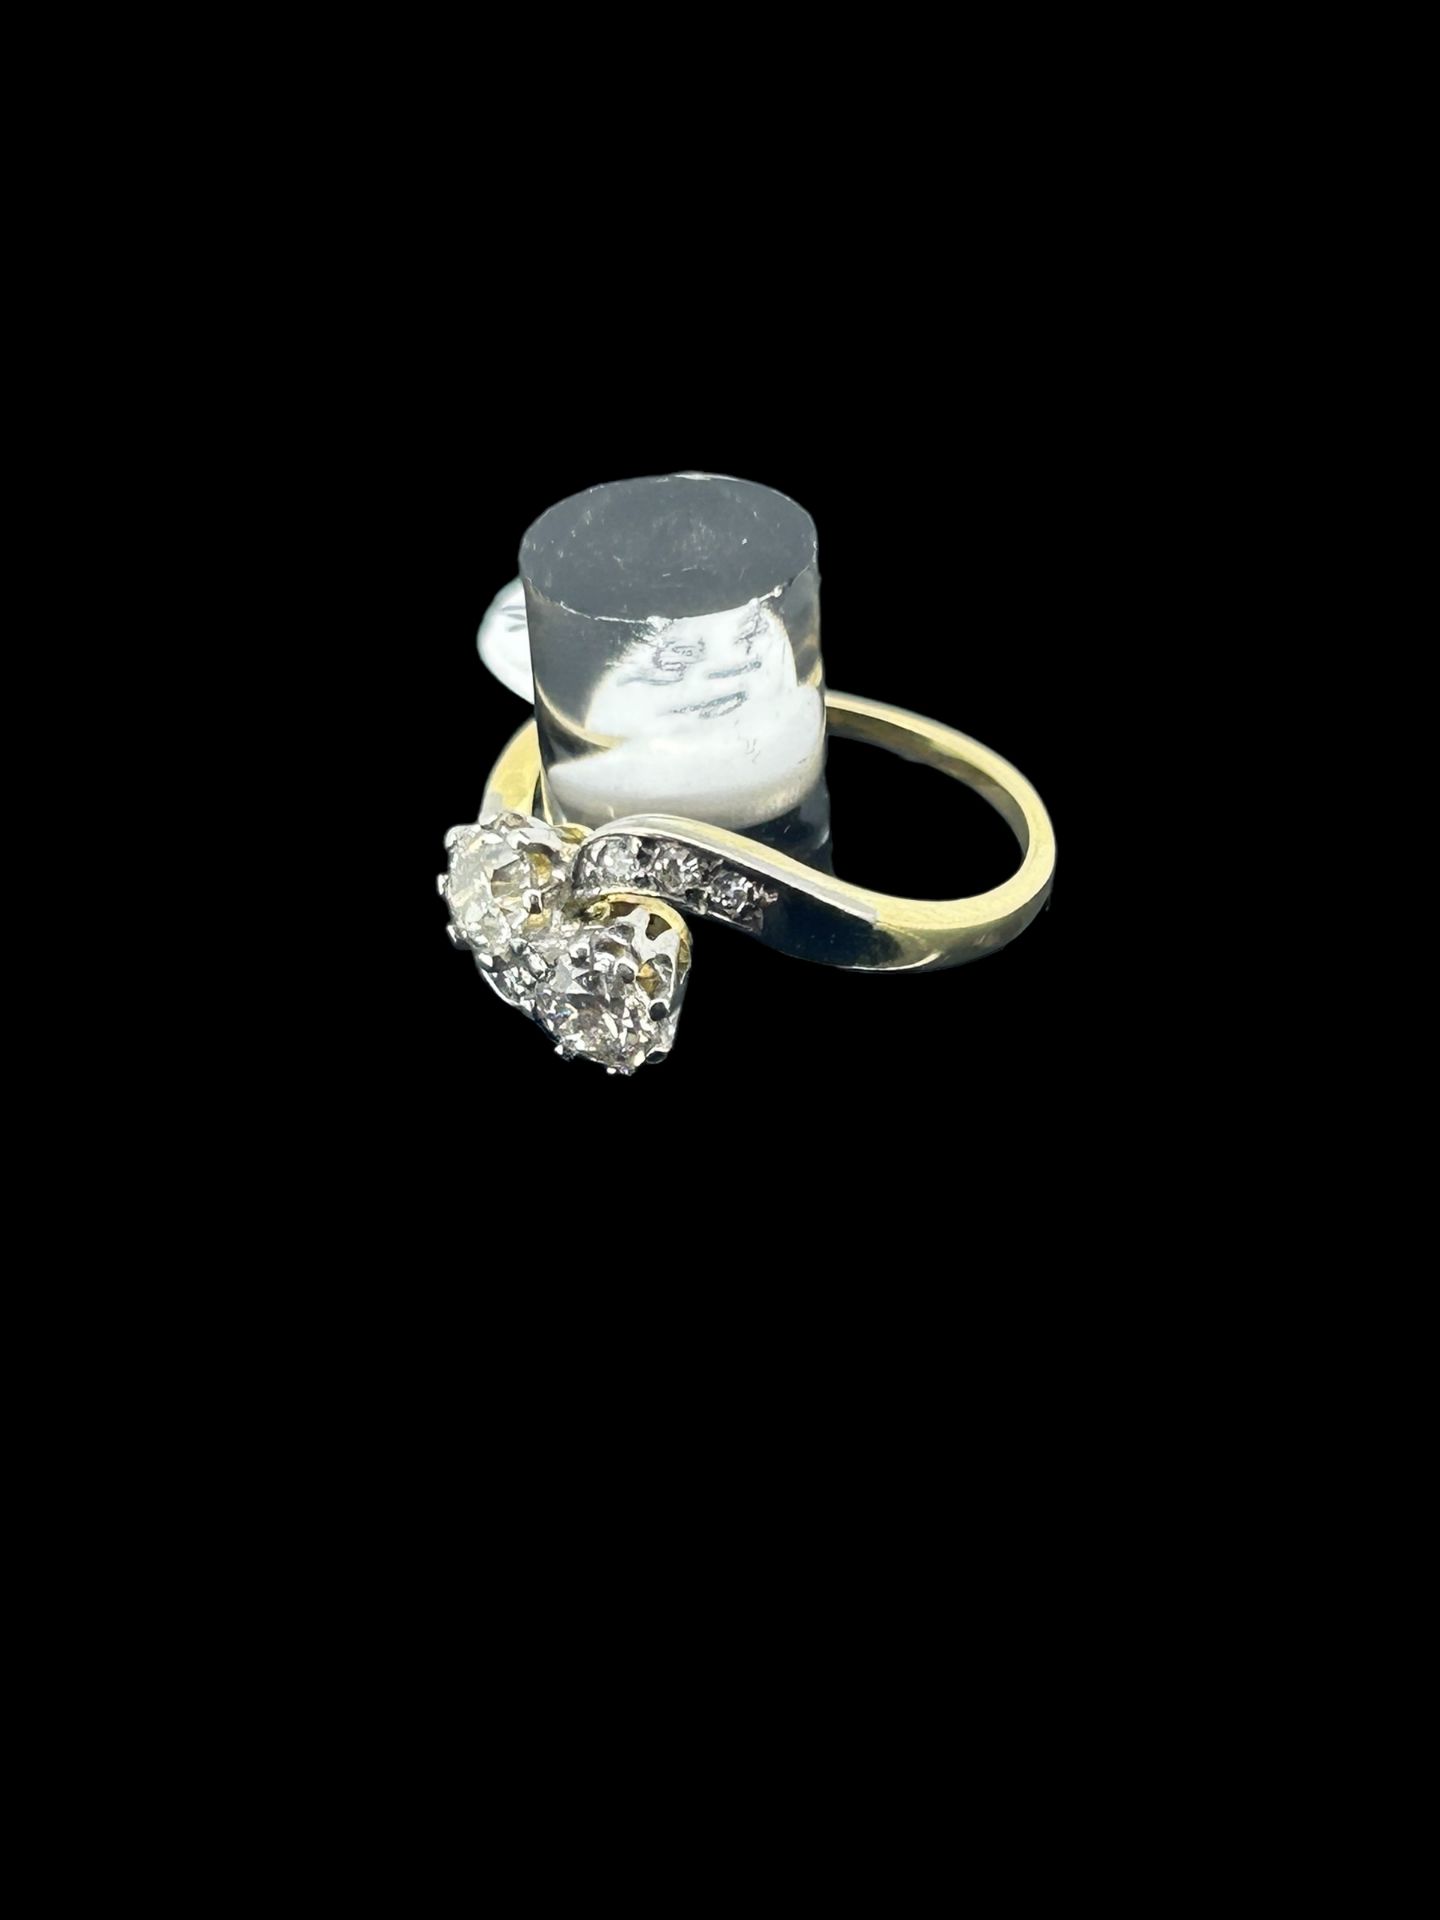 18k yellow gold ring, set with 2 x 0.35 carat diamonds - Image 2 of 3